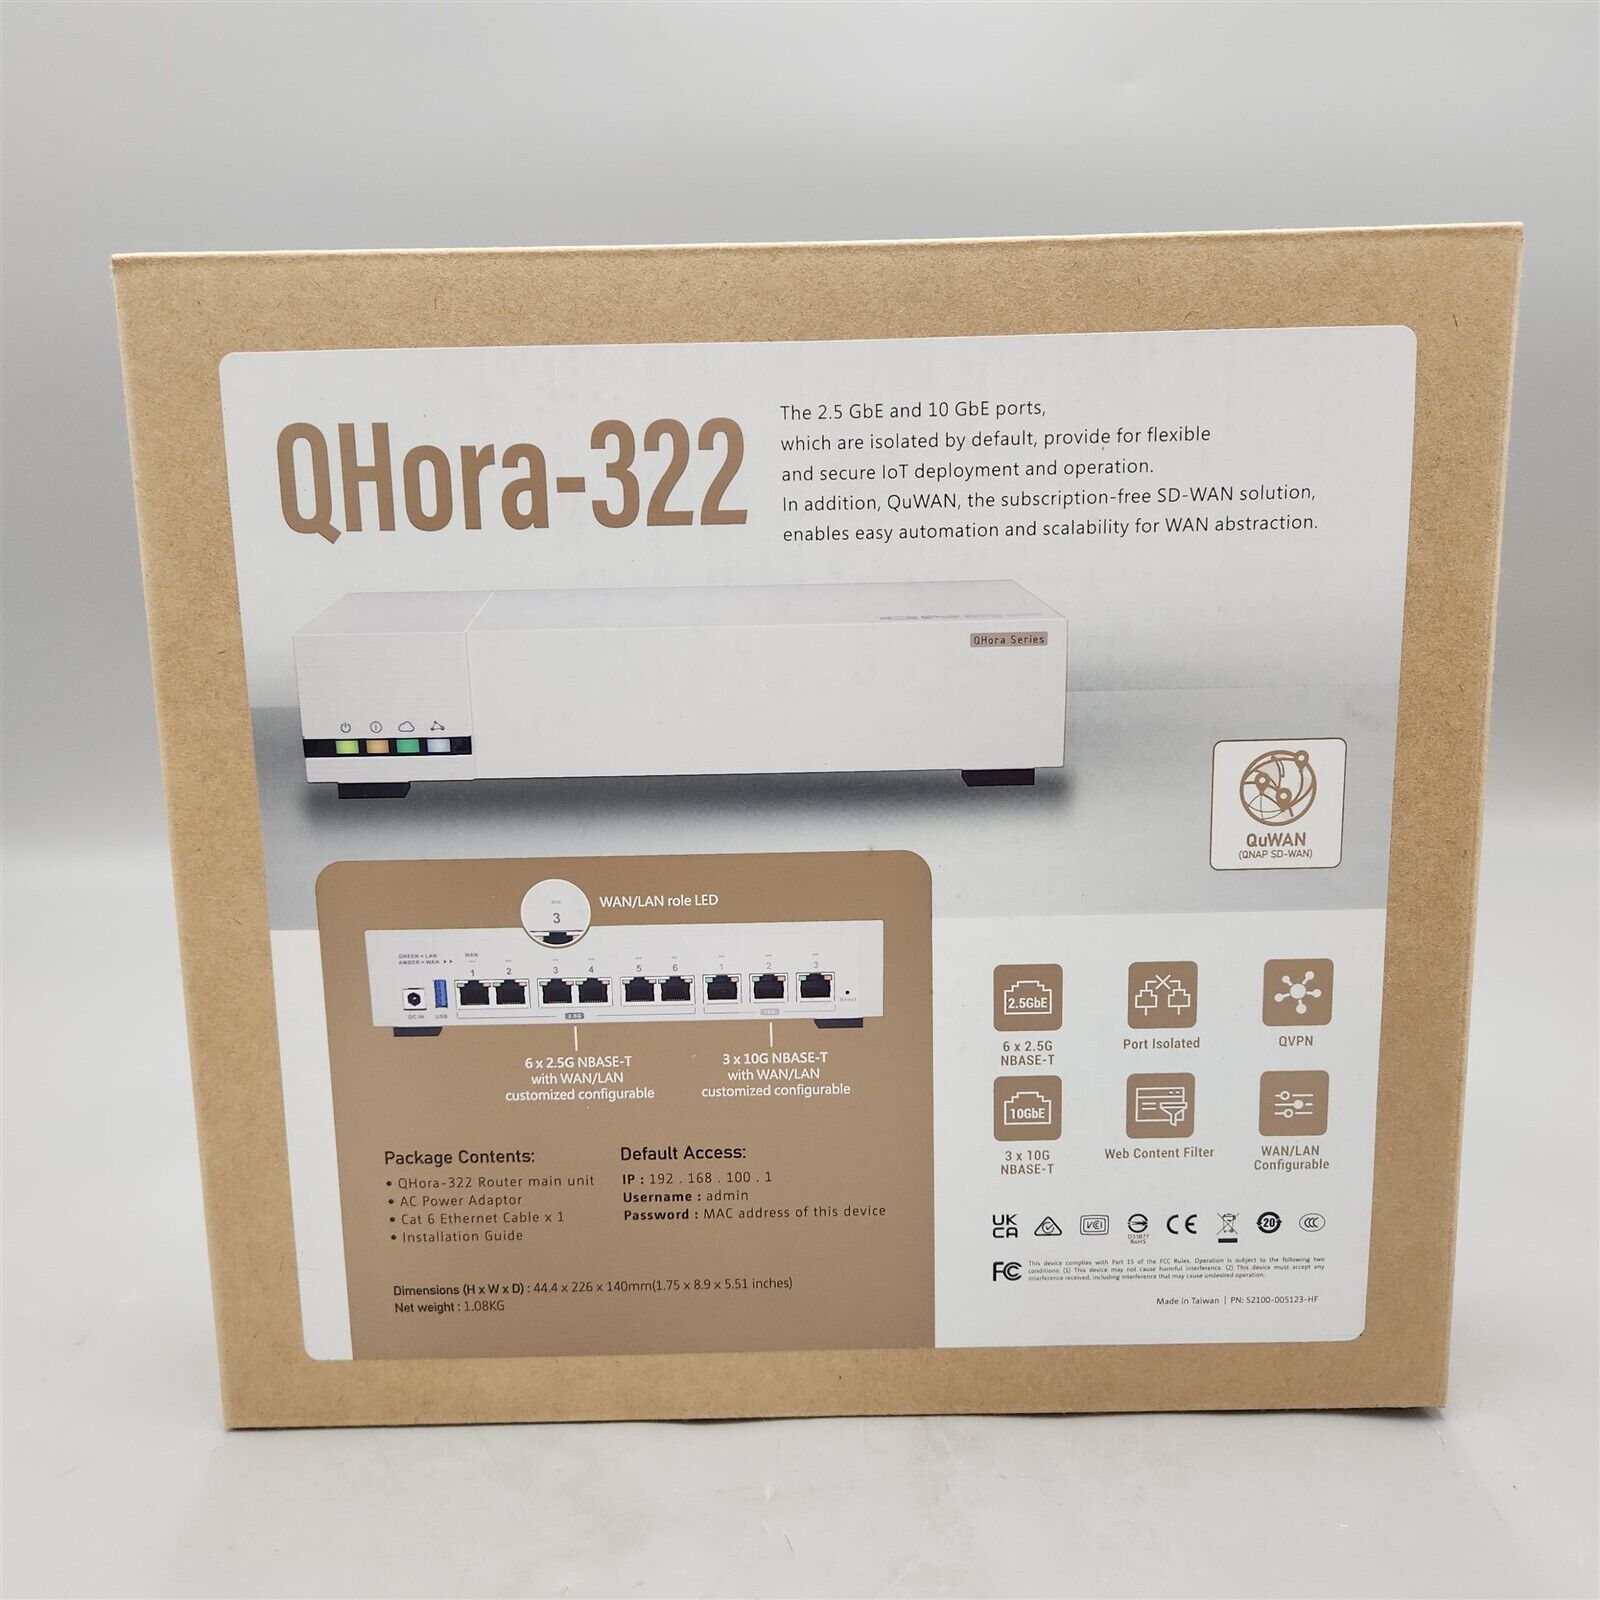 -NEW- QNAP QHora QHora-322 Ethernet Wireless Router [QHora-322]